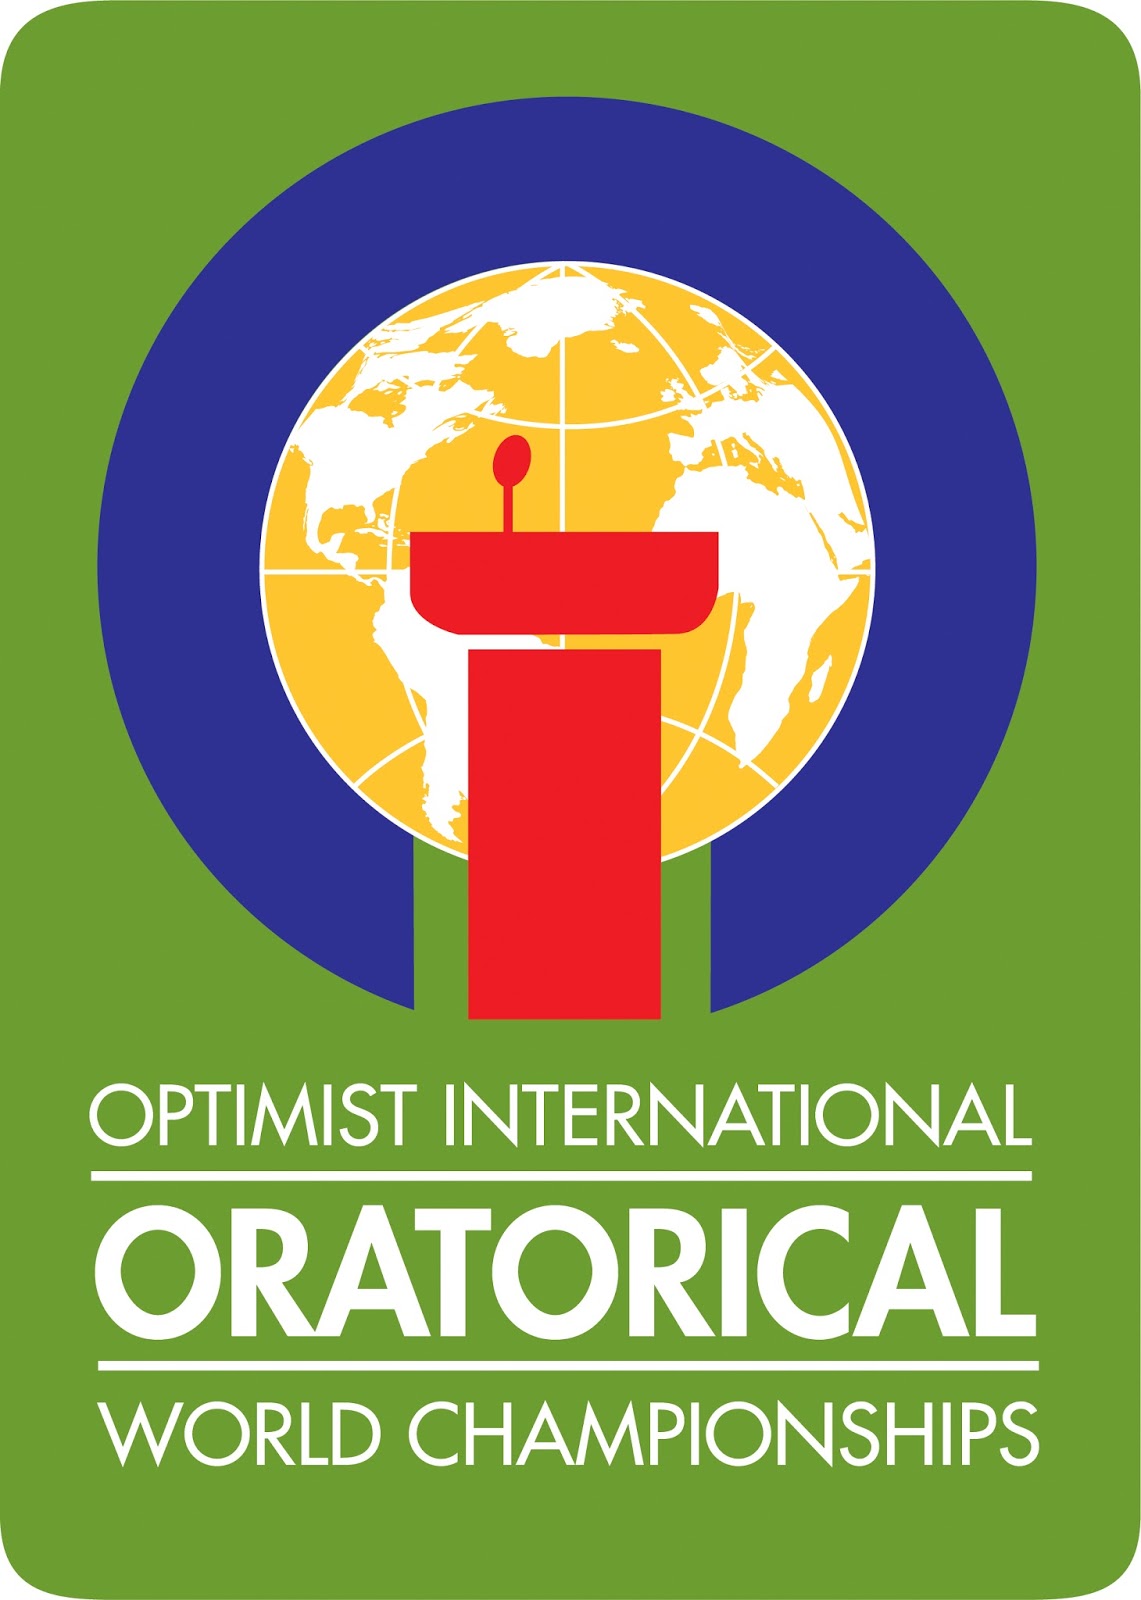 PNW District Optimist Clubs Optimist International Oratorical contest